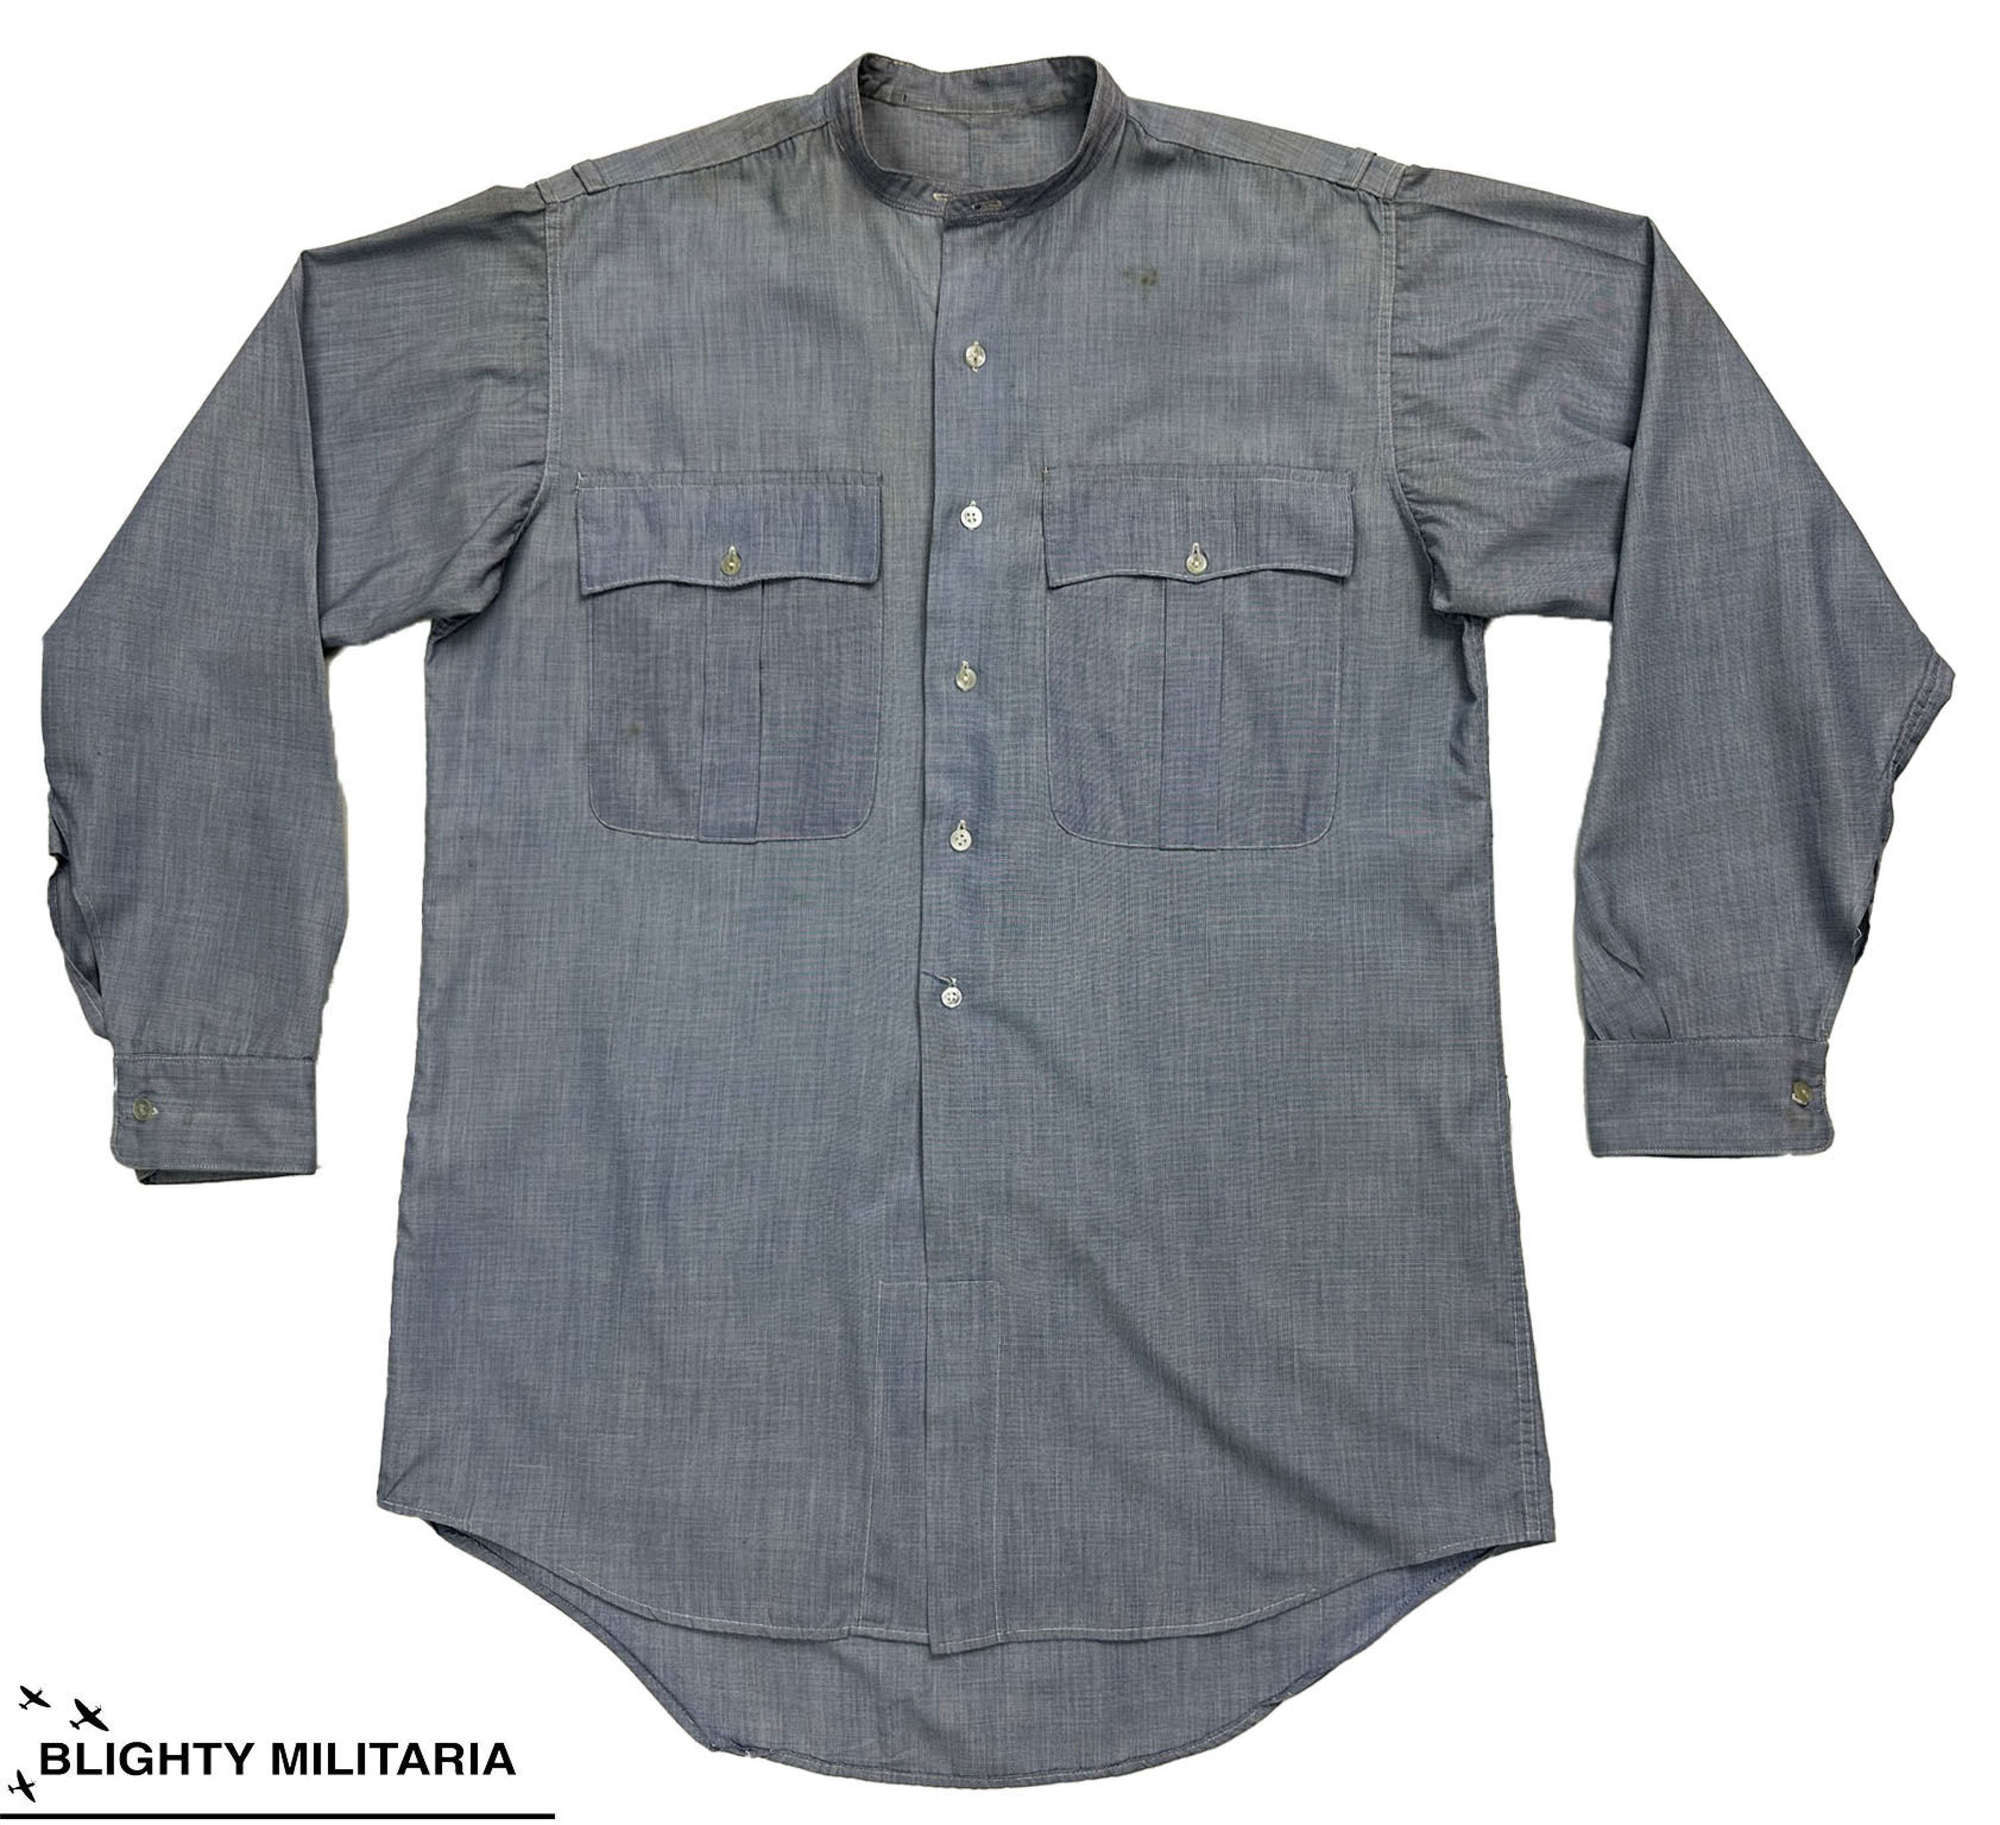 Original 1950s RAF Officer's Collarless Shirt - Size 15 1/2